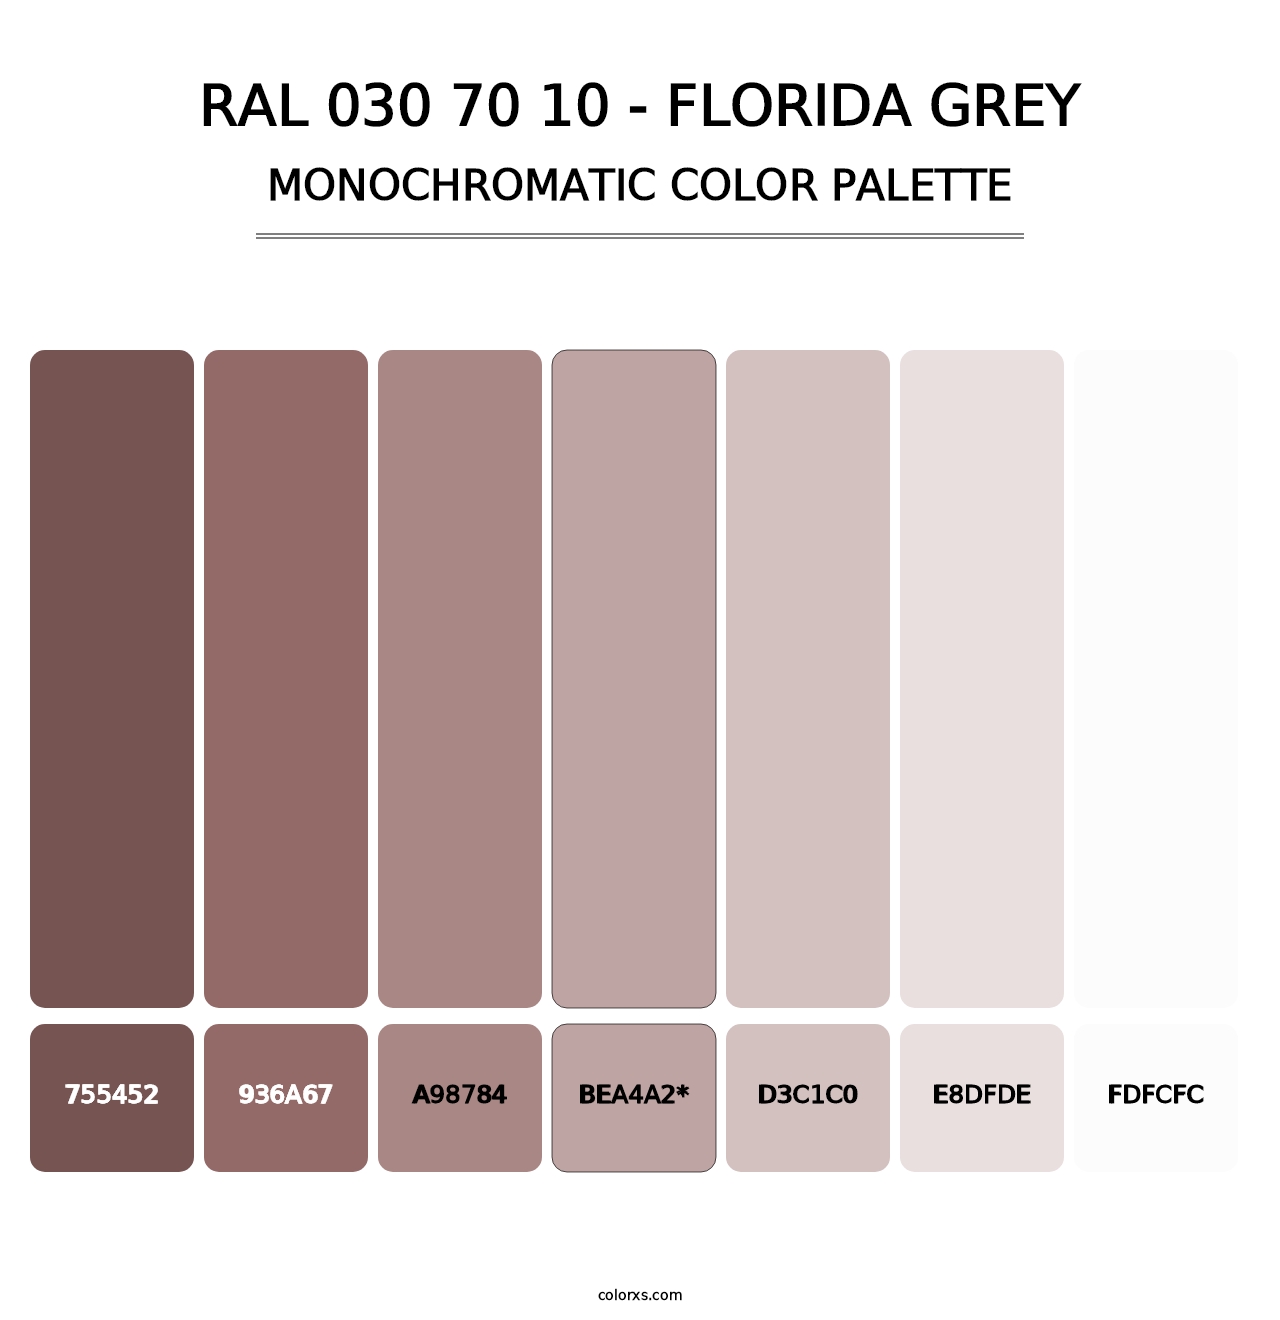 RAL 030 70 10 - Florida Grey - Monochromatic Color Palette